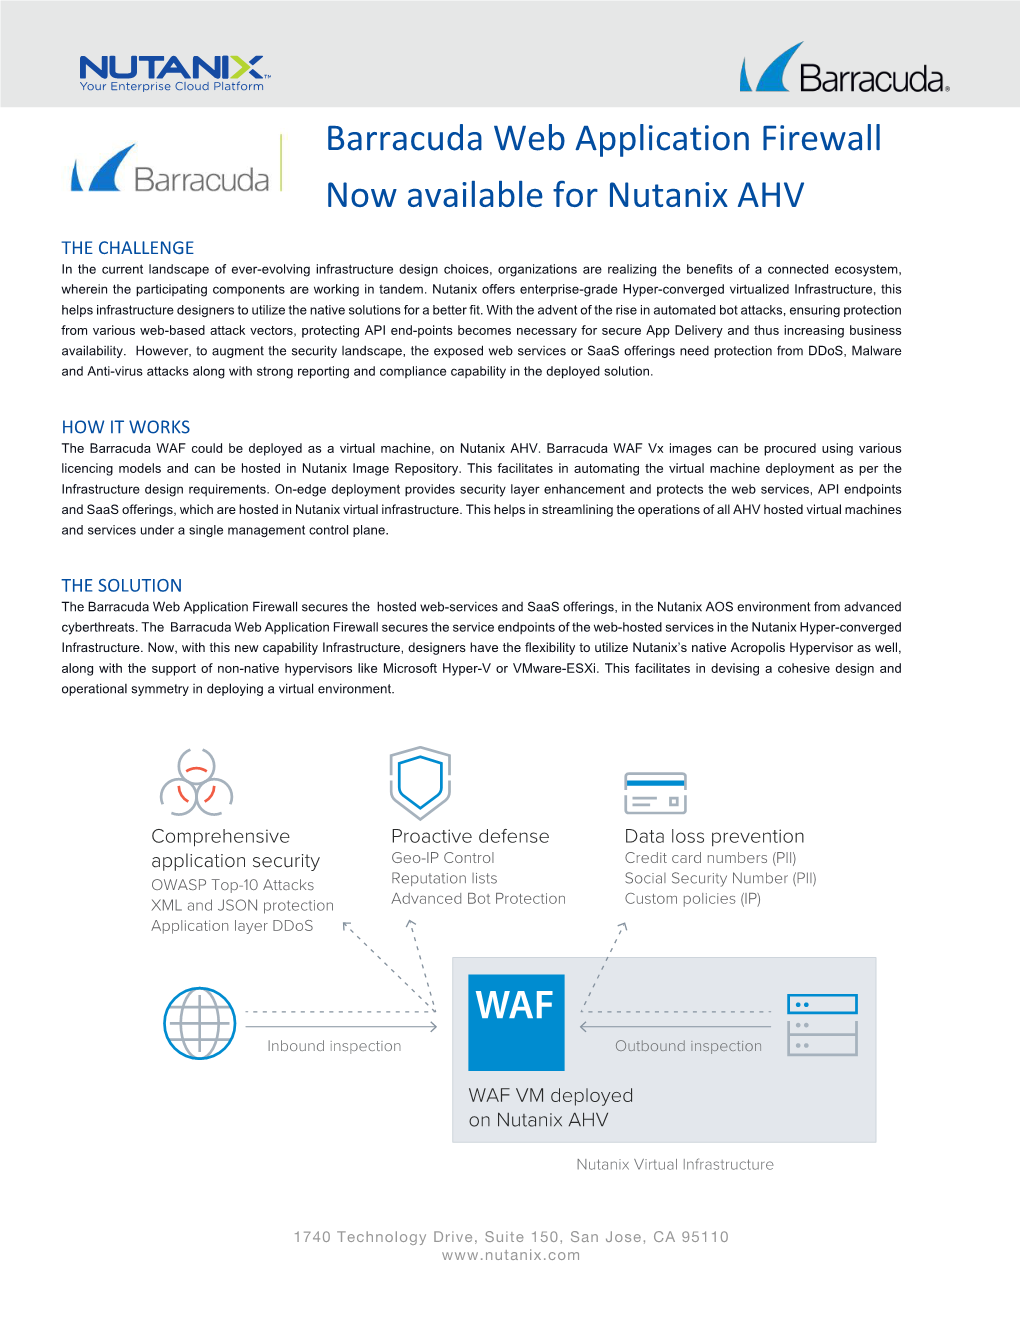 Barracuda Web Application Firewall Now Available for Nutanix AHV